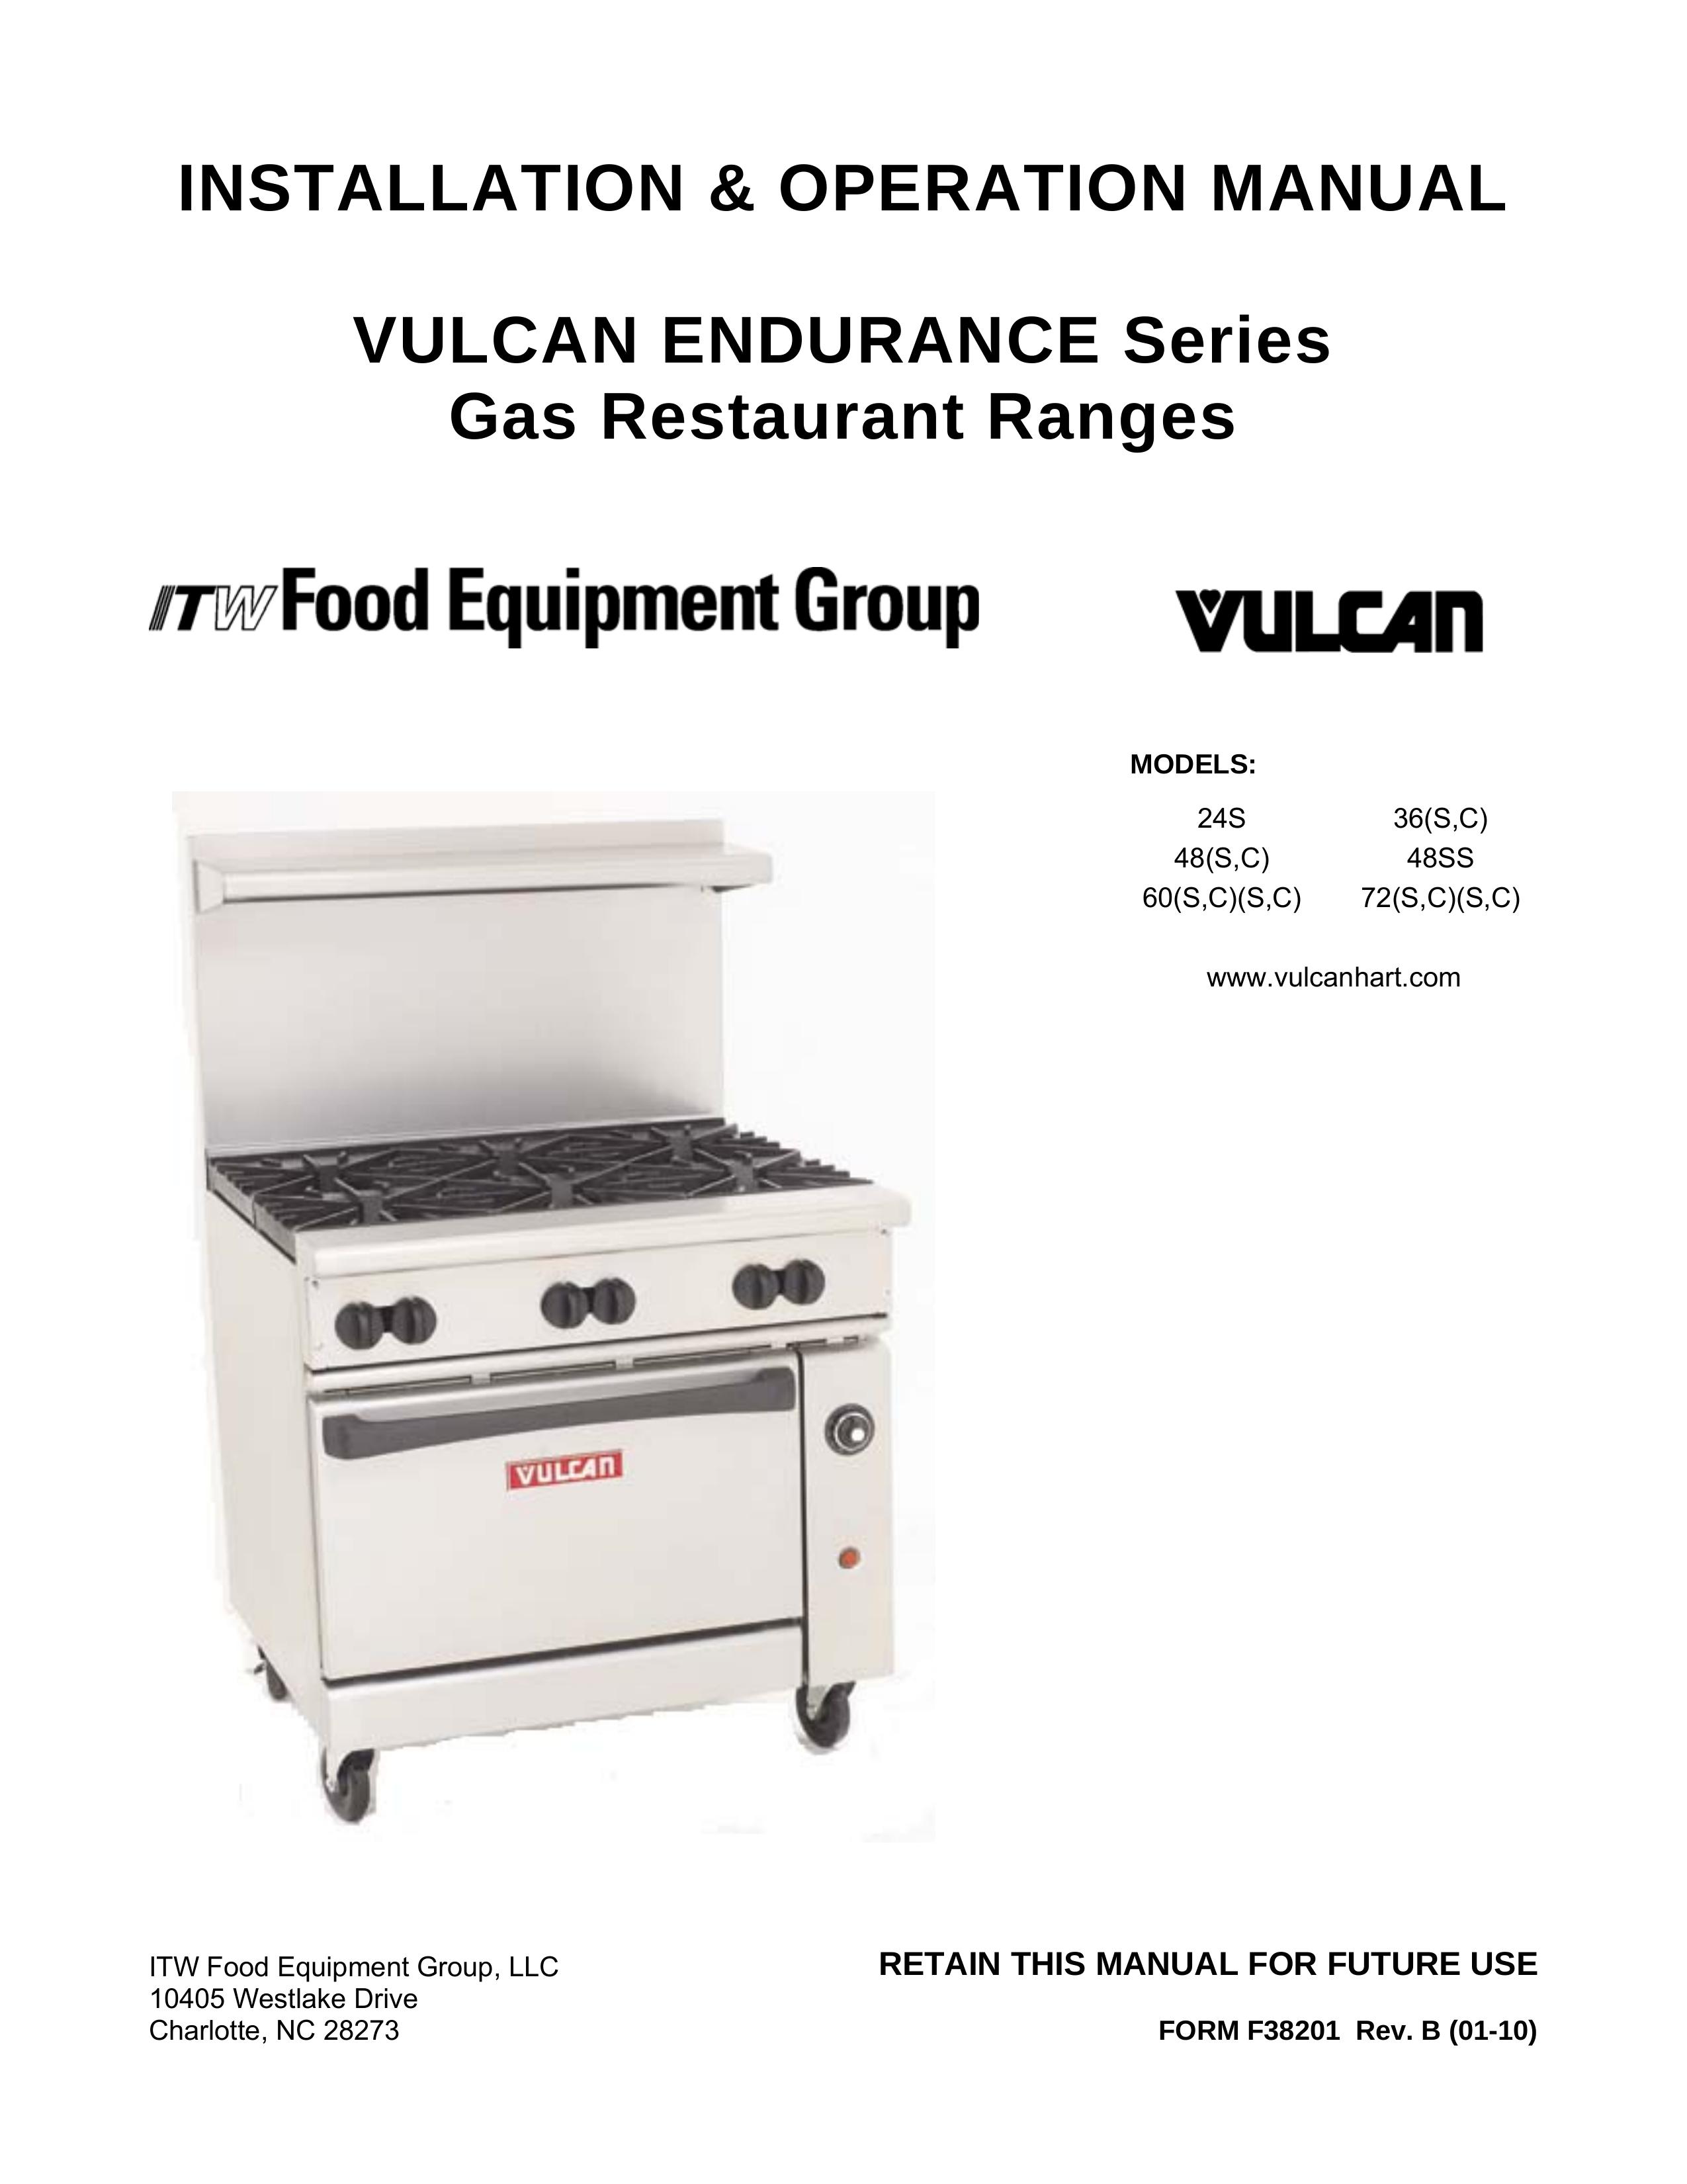 Vulcan-Hart 60(S,C)(S,C) Range User Manual